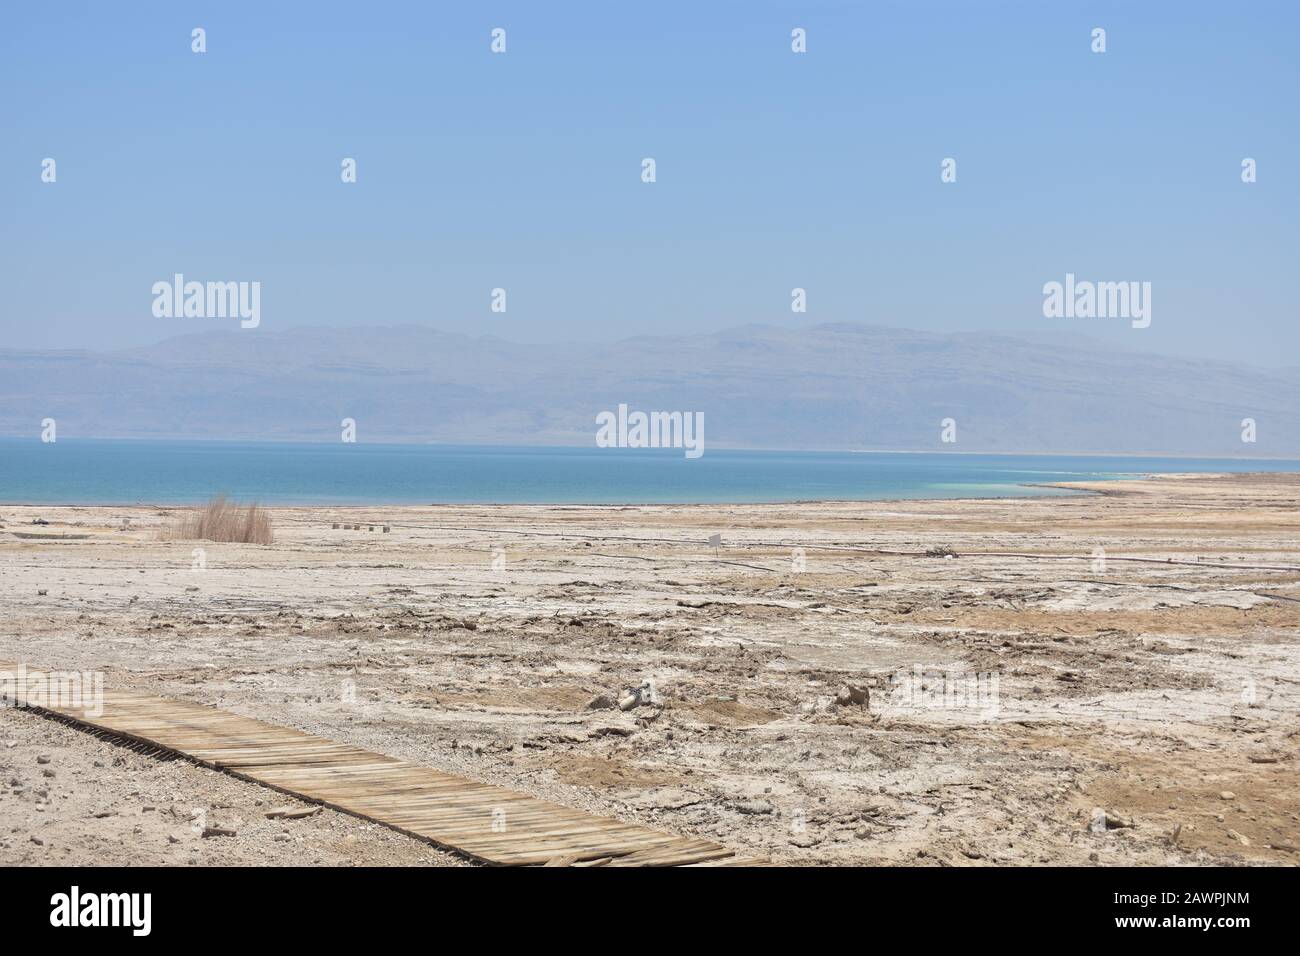 Landscape at the Dead Sea with a wooden bridge Ein Gedi Stock Photo